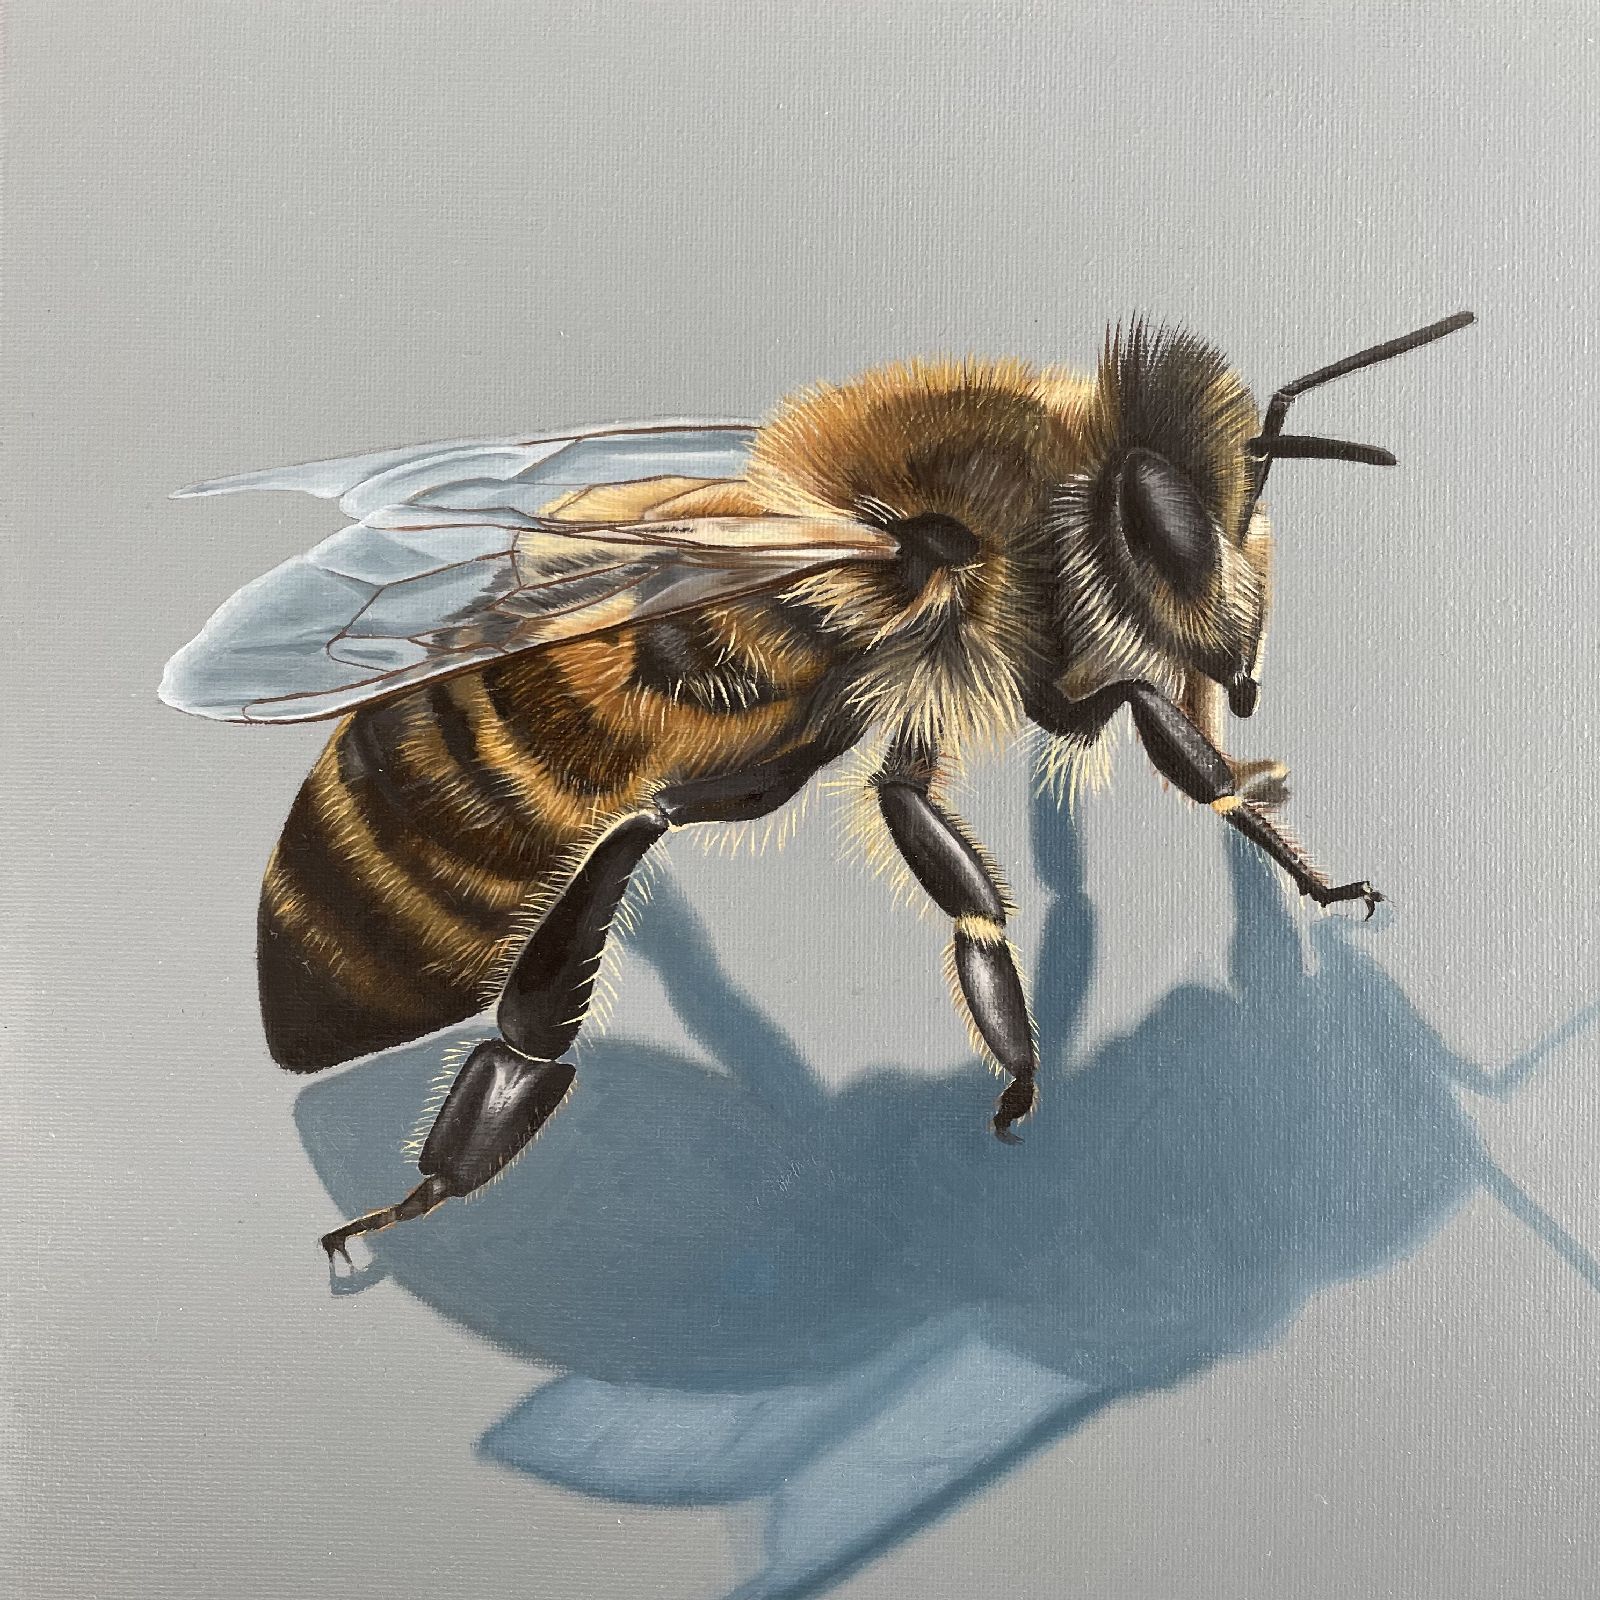 Cartoon honey bees drawing stock vector. Illustration of cute - 194286130-saigonsouth.com.vn